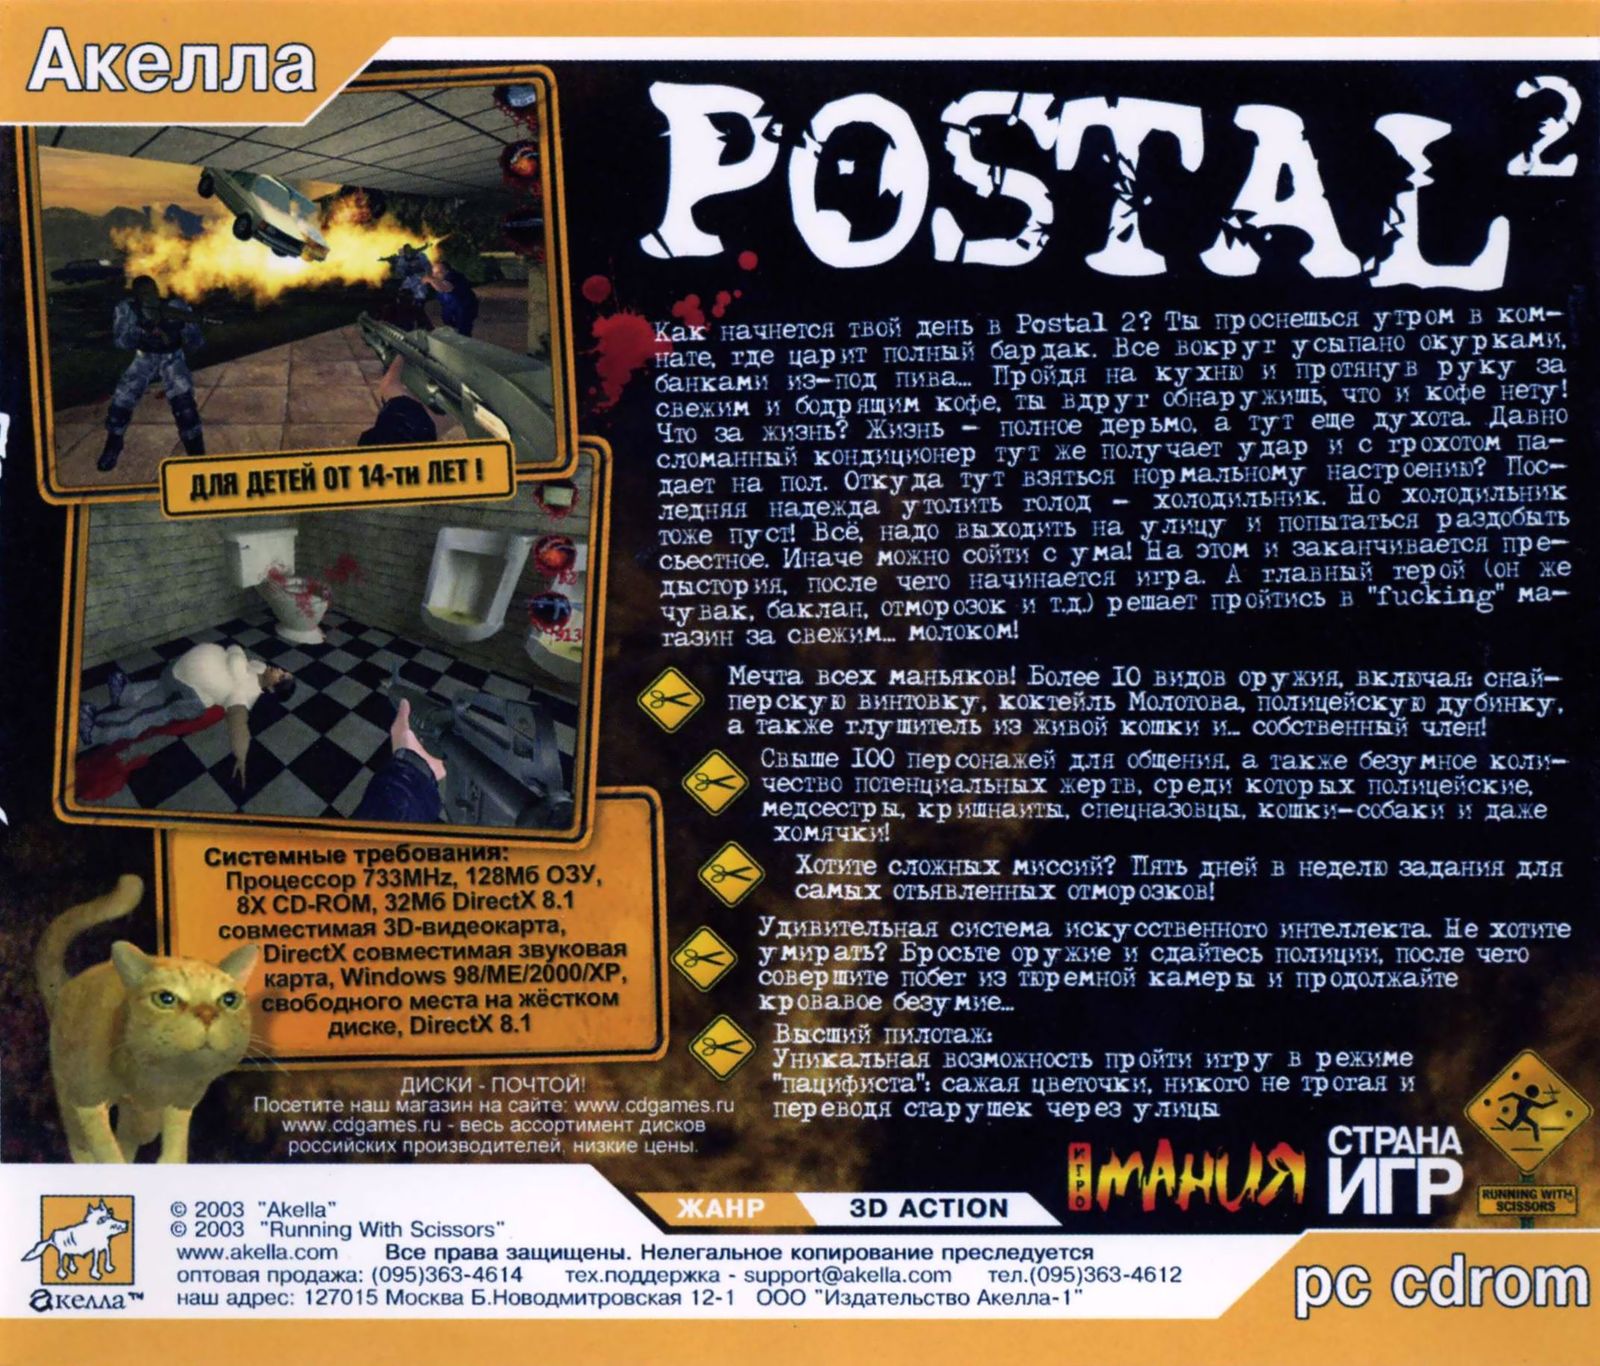 Postal 2 awp delete review скачать игру фото 52